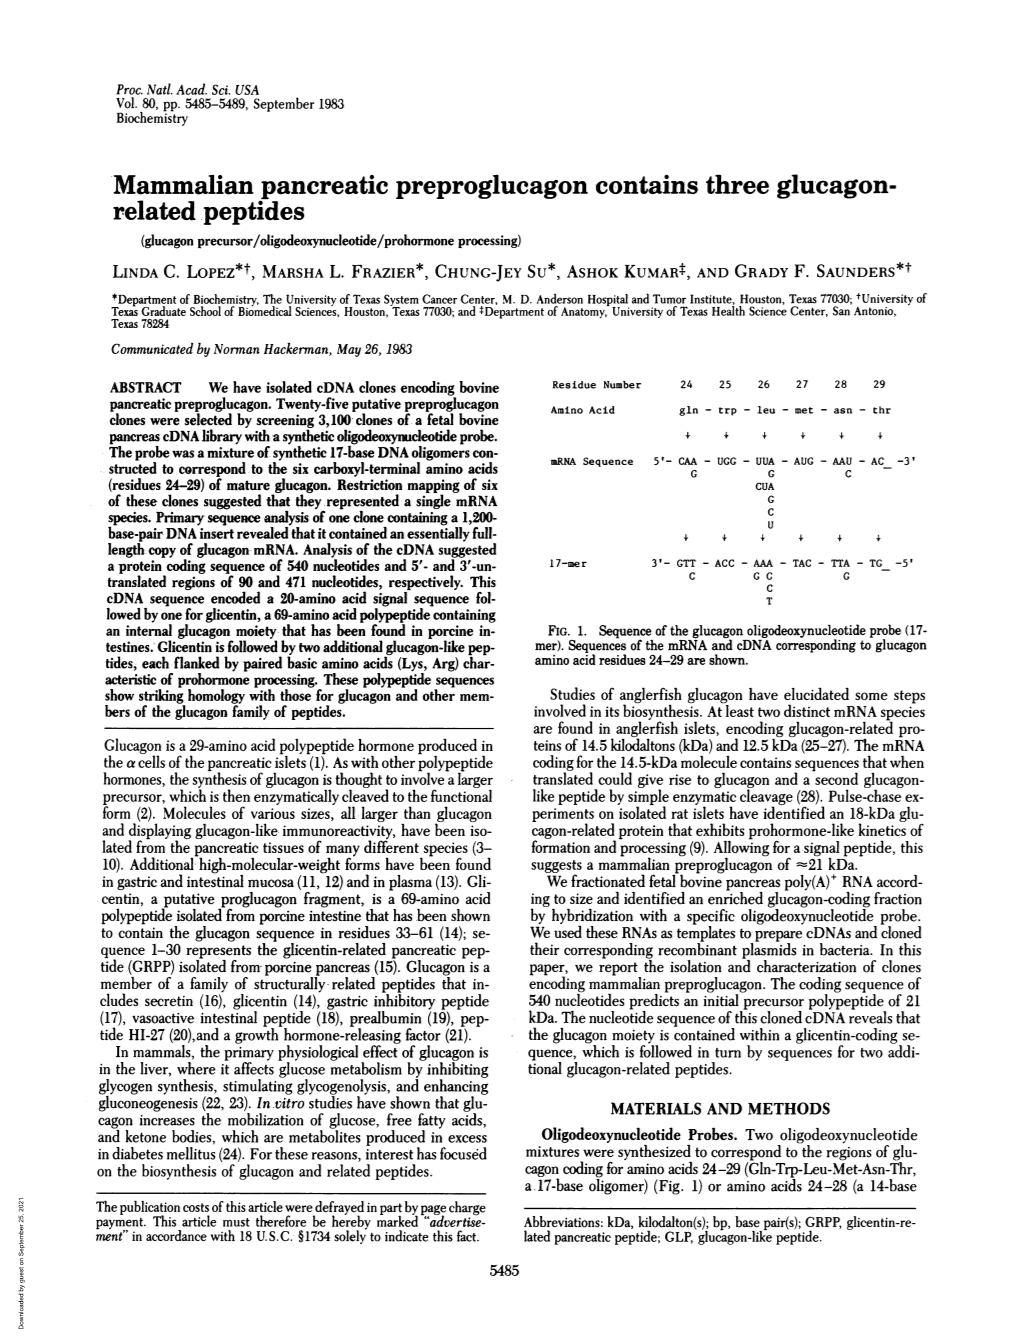 Mammalian Pancreatic Preproglucagon Contains Three Glucagon- Related Peptides (Glucagon Precursor/Oligodeoxynucleotide/Prohormone Processing) LINDA C